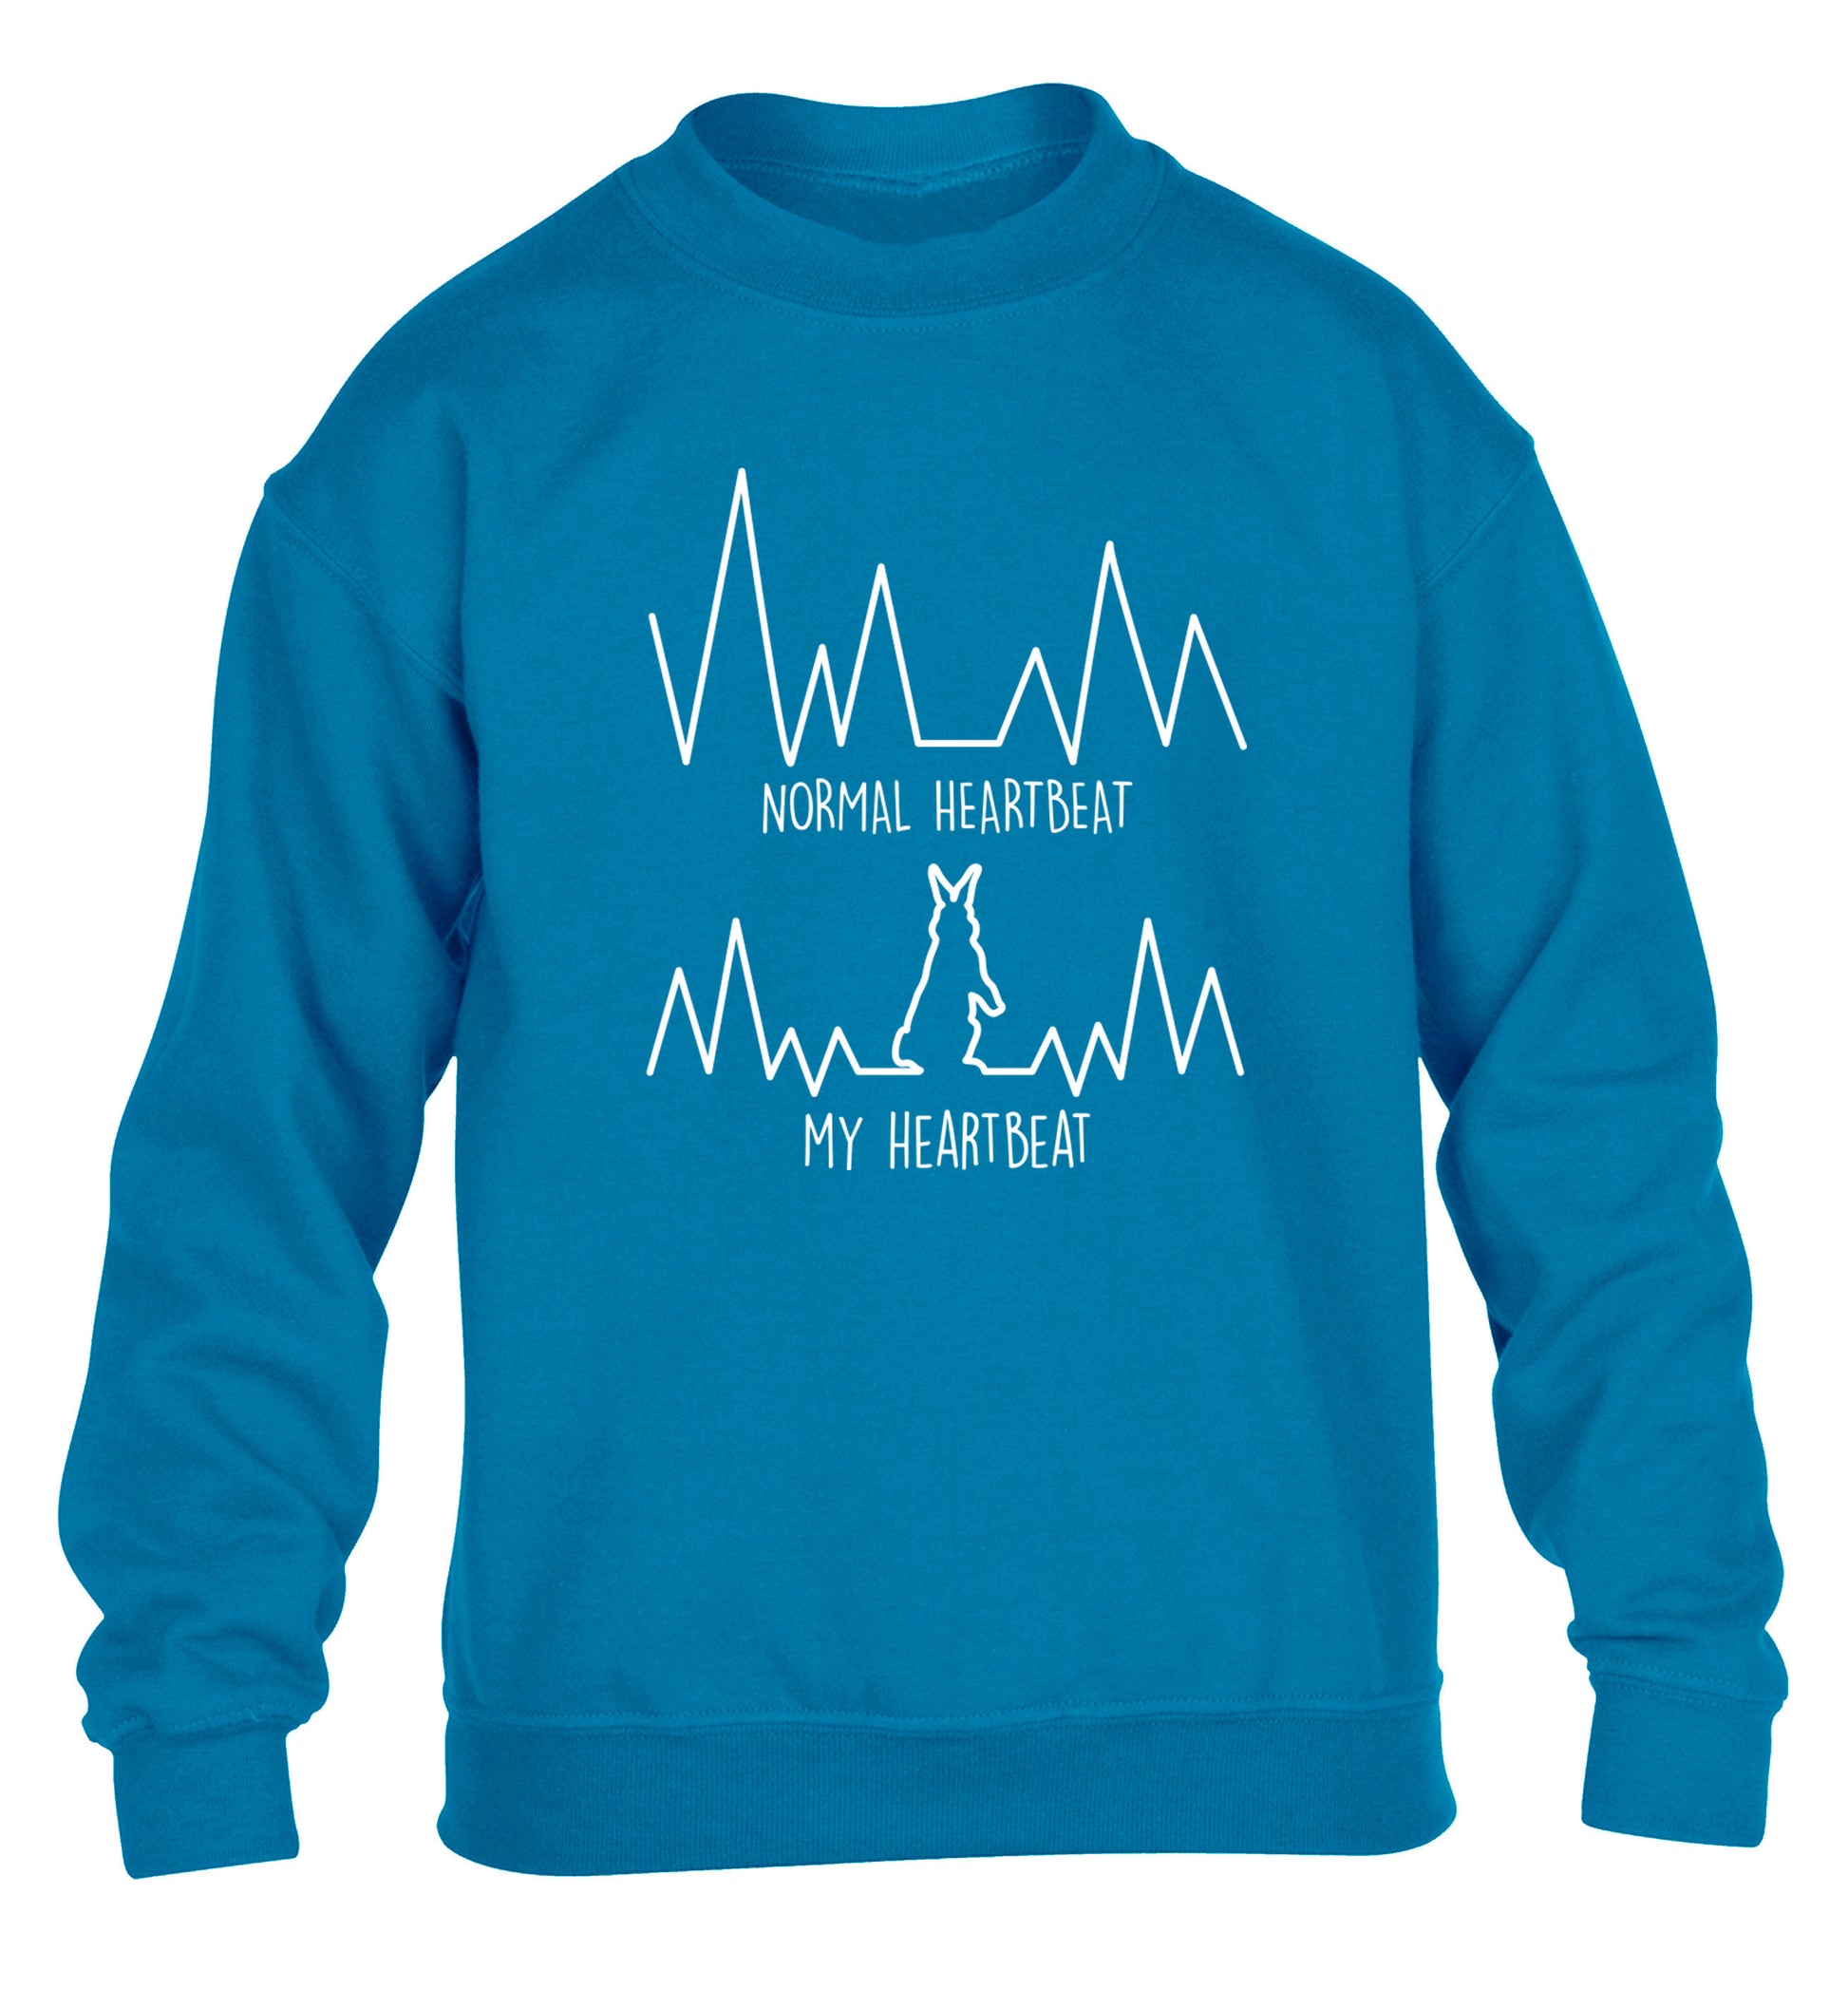 Normal heartbeat, my heartbeat rabbit lover children's blue  sweater 12-14 Years